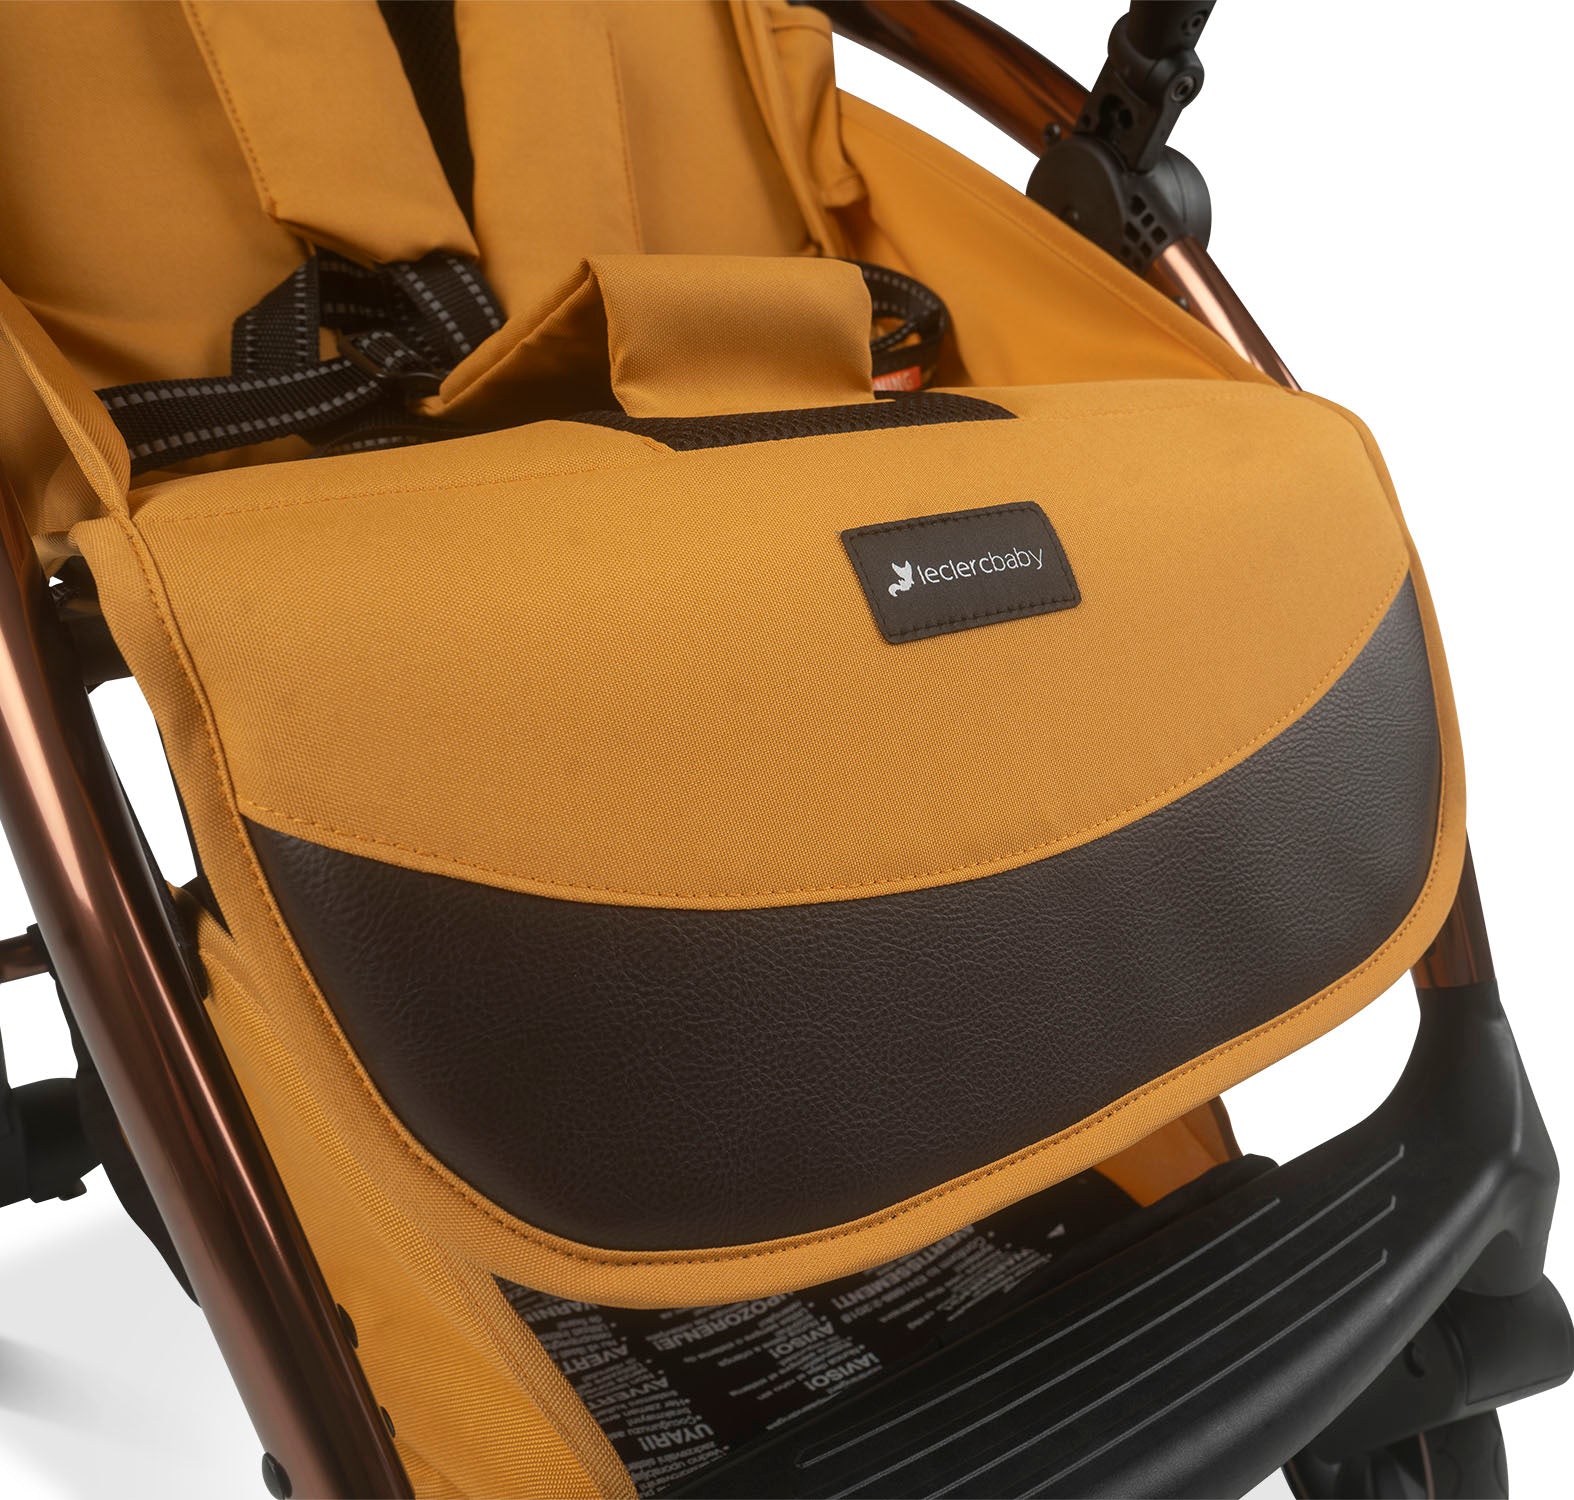 Influencer Air Twin Stroller Bundle : Golden Mustard Stroller + Piano Black Stroller